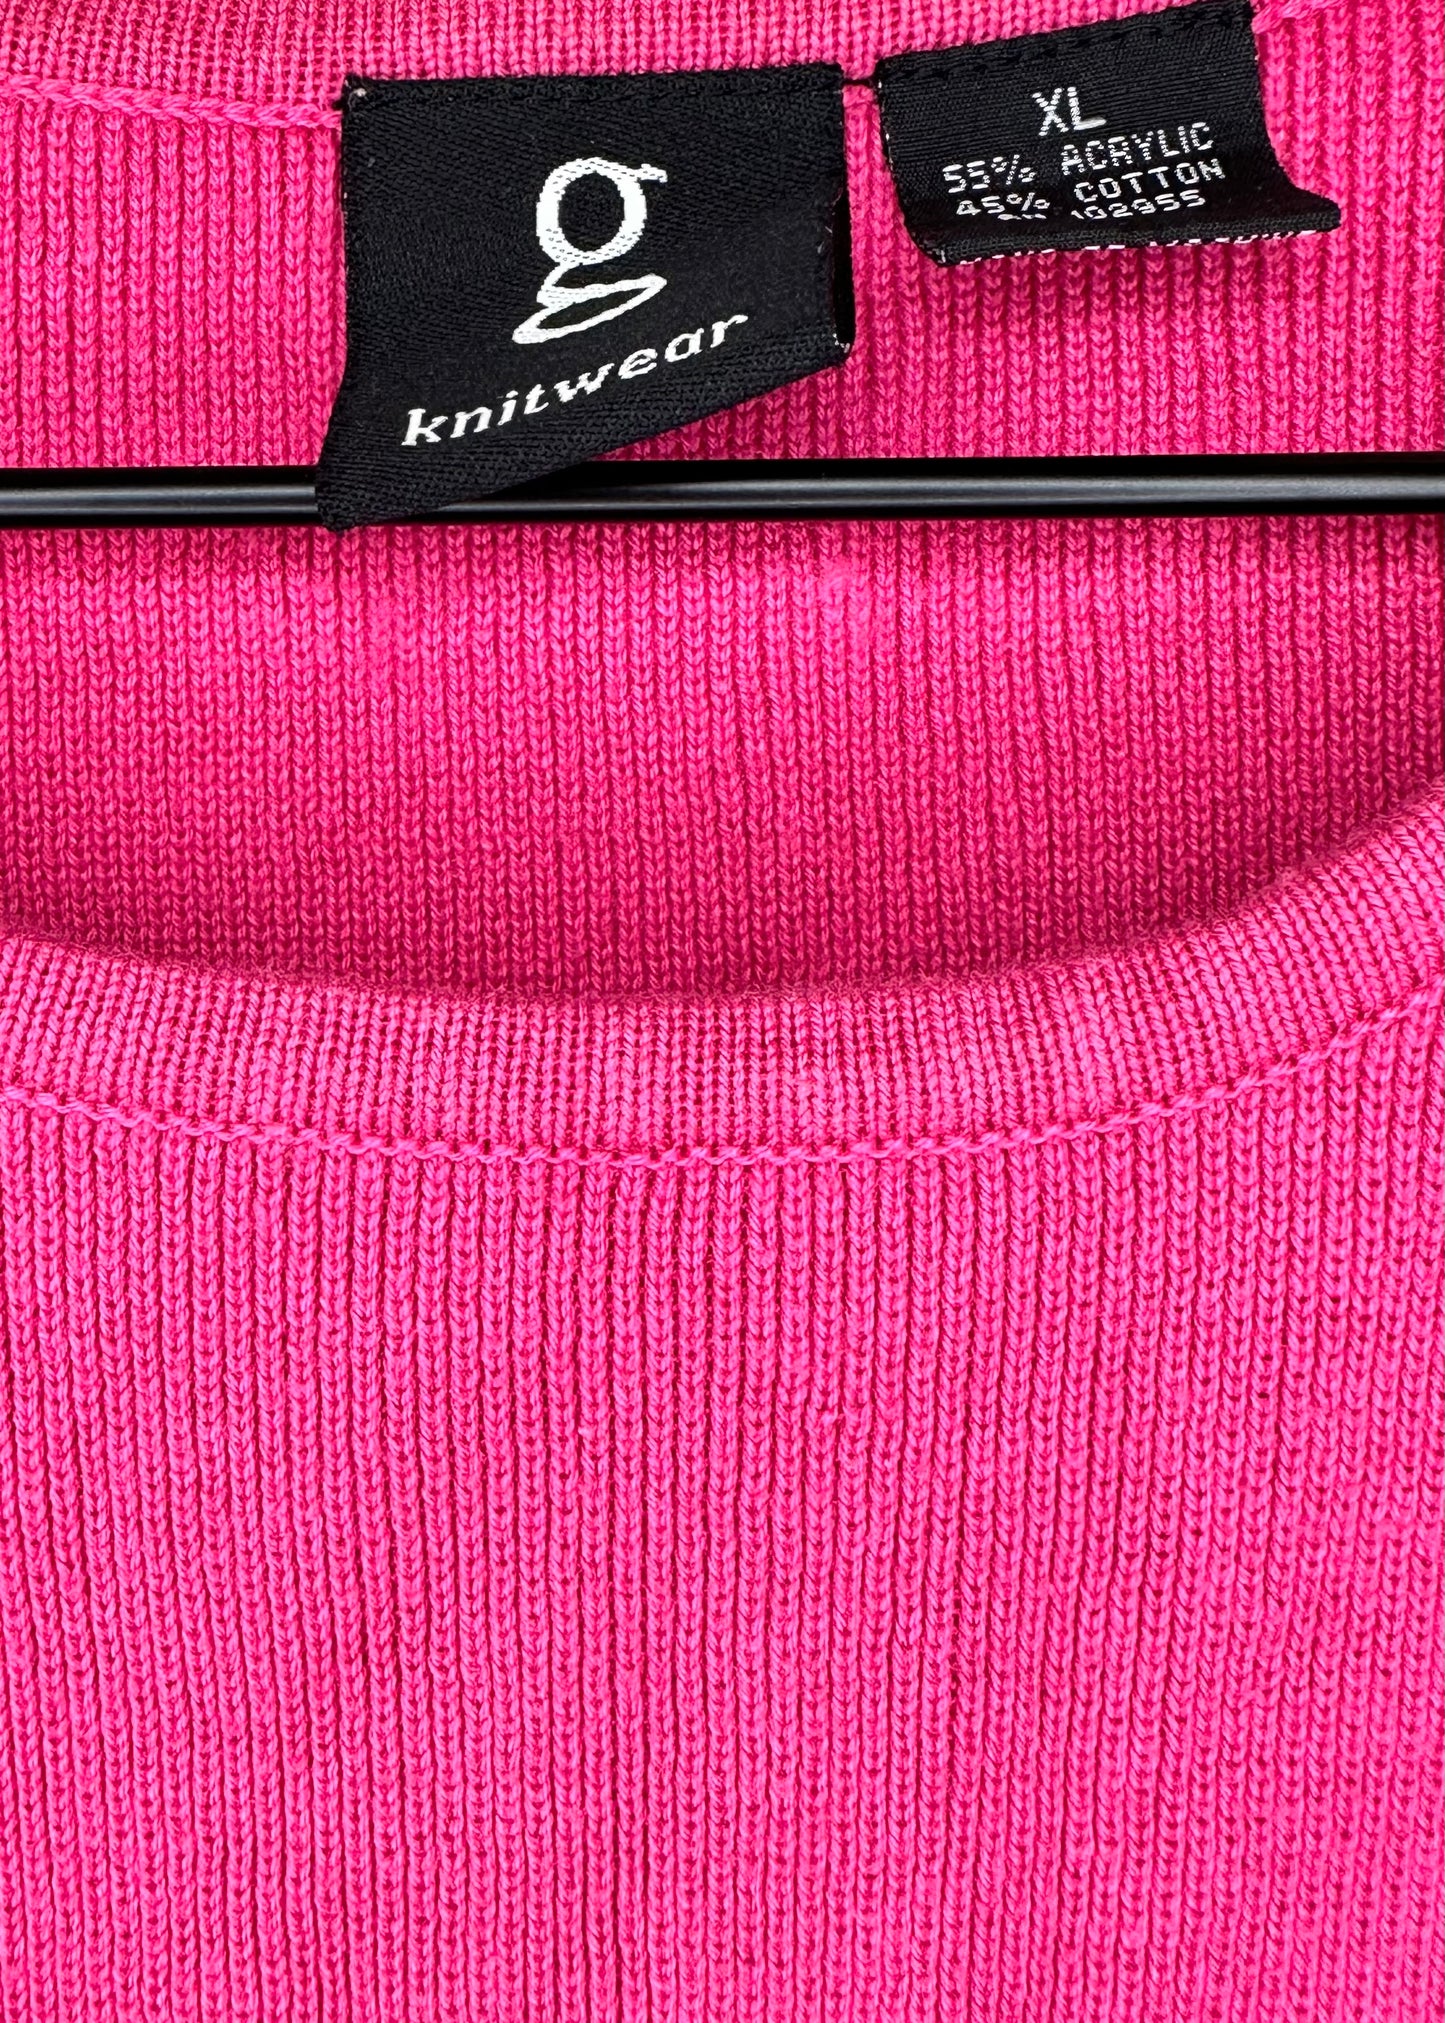 Pink Sleeveless Shirt by G Knitwear